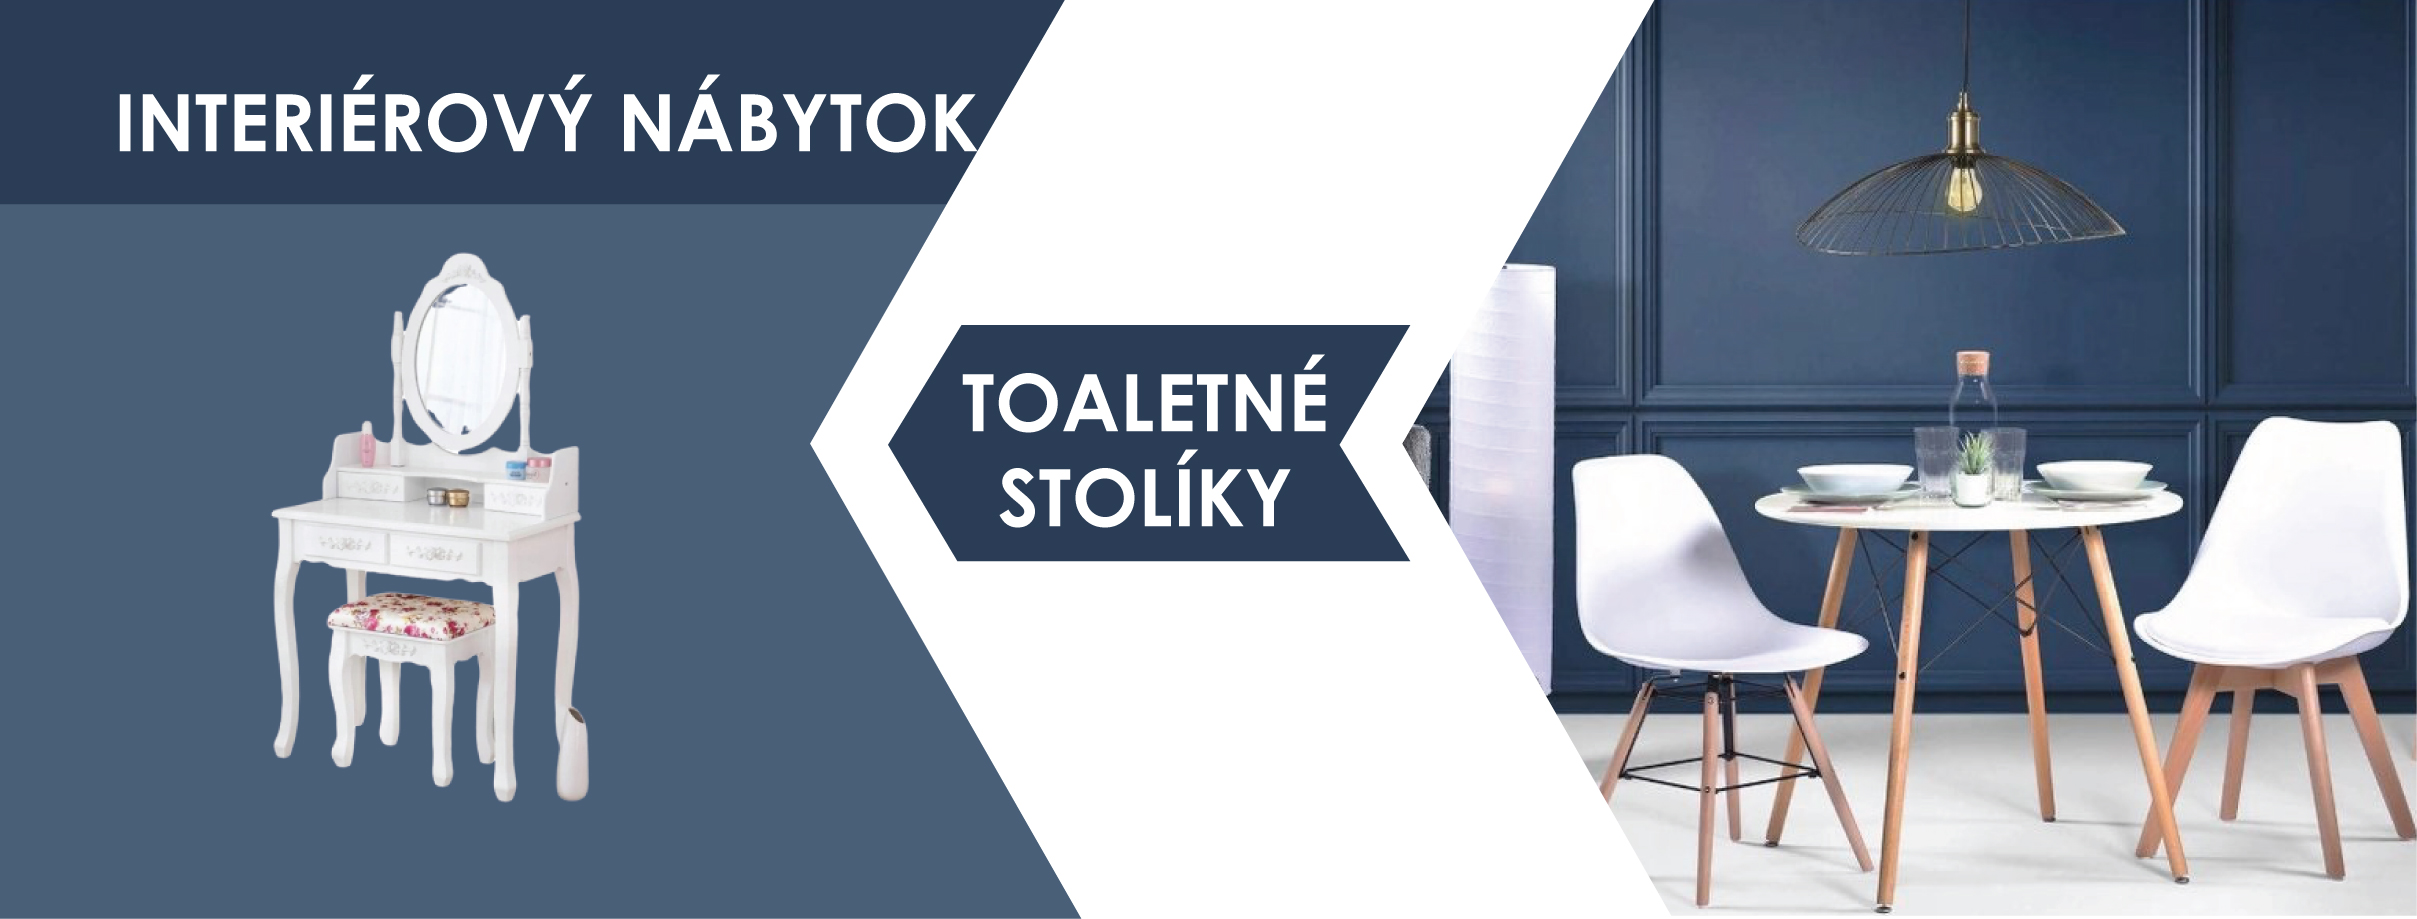 SK_NABYTOK_TOALET.STOL-01